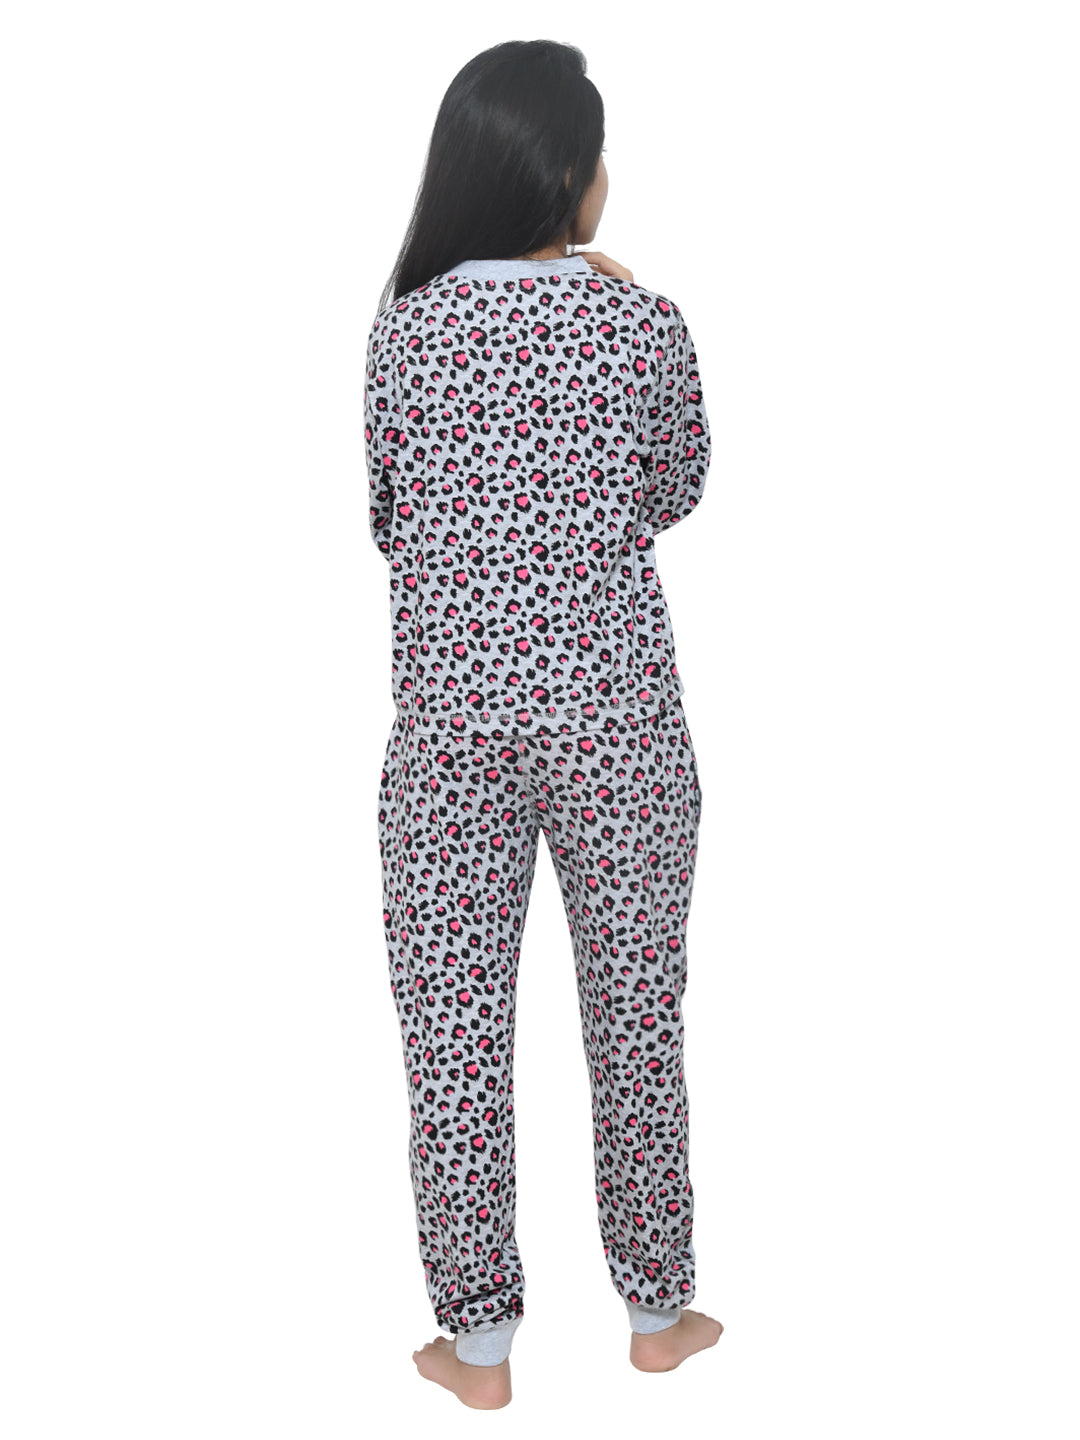 Grey Cheetah Printed Night Dress for Girls